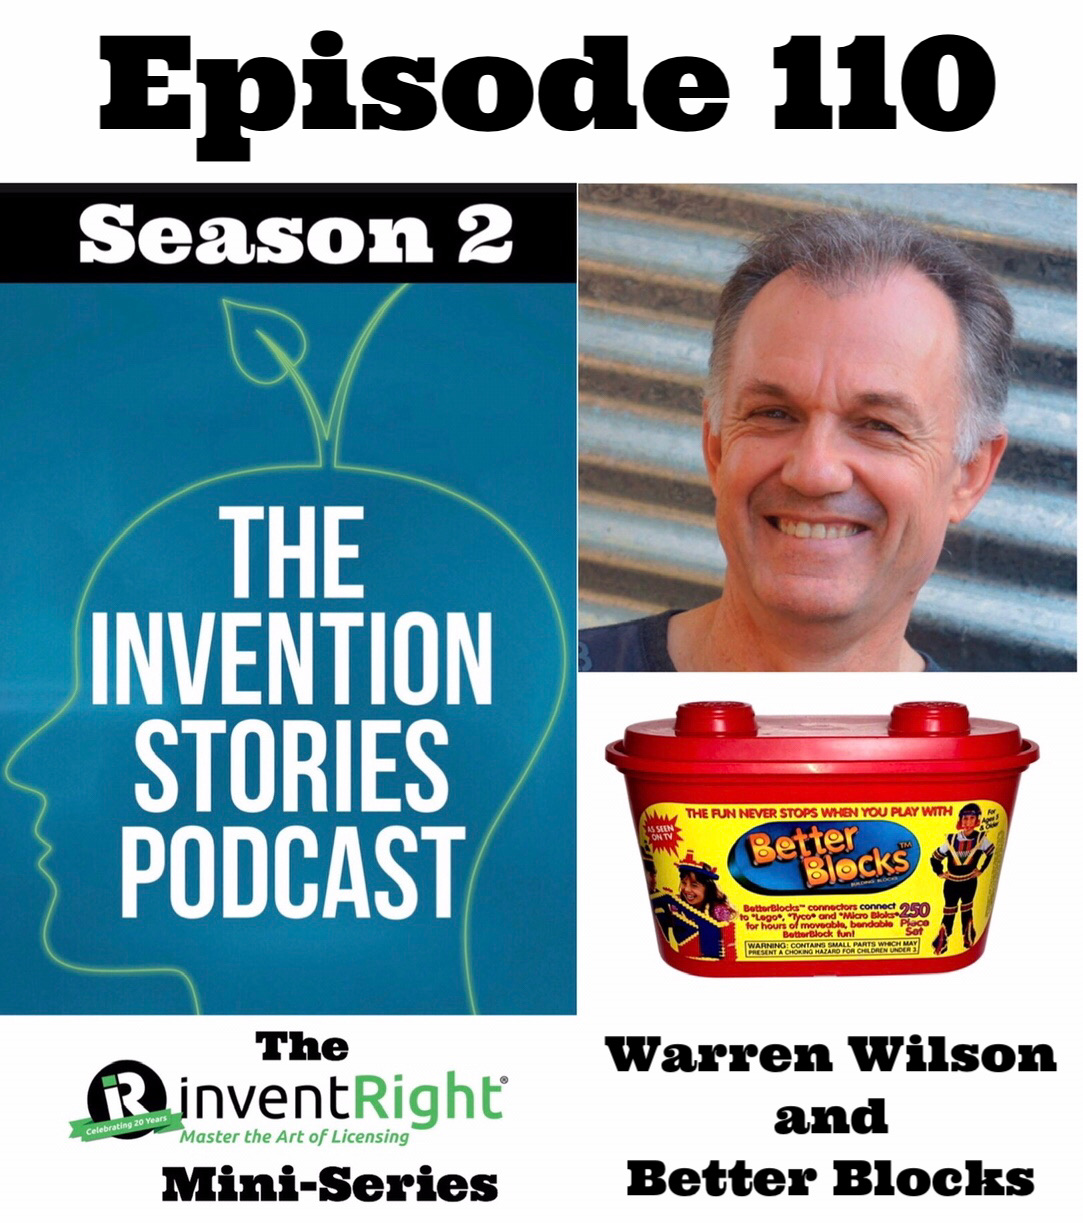 Warren Wilson Invented Better Blocks and is interview by Robert Bear